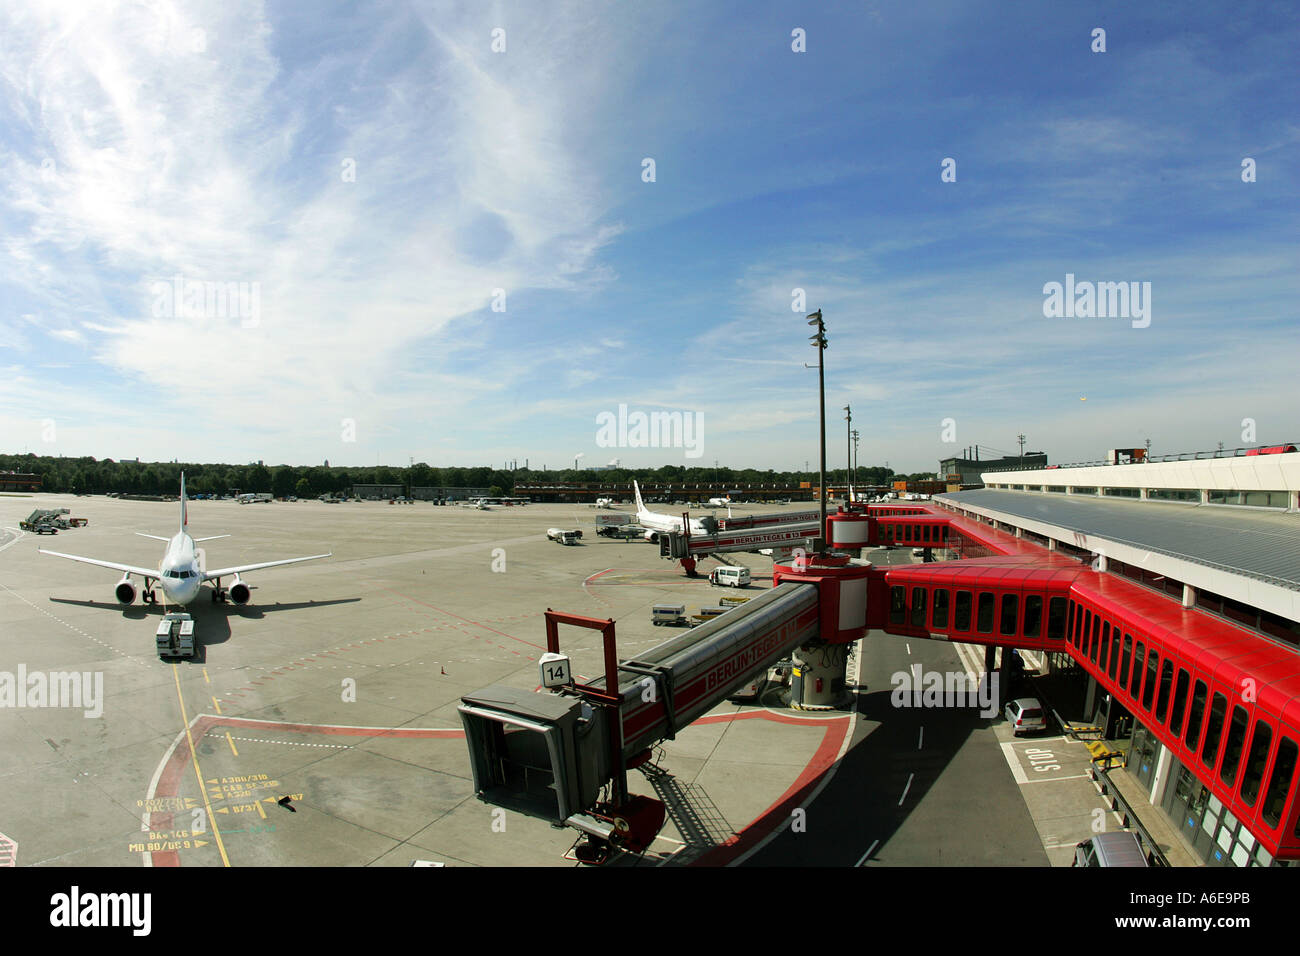 Airplane and boarding bridge at Tegel airport, Berlin Stock Photo